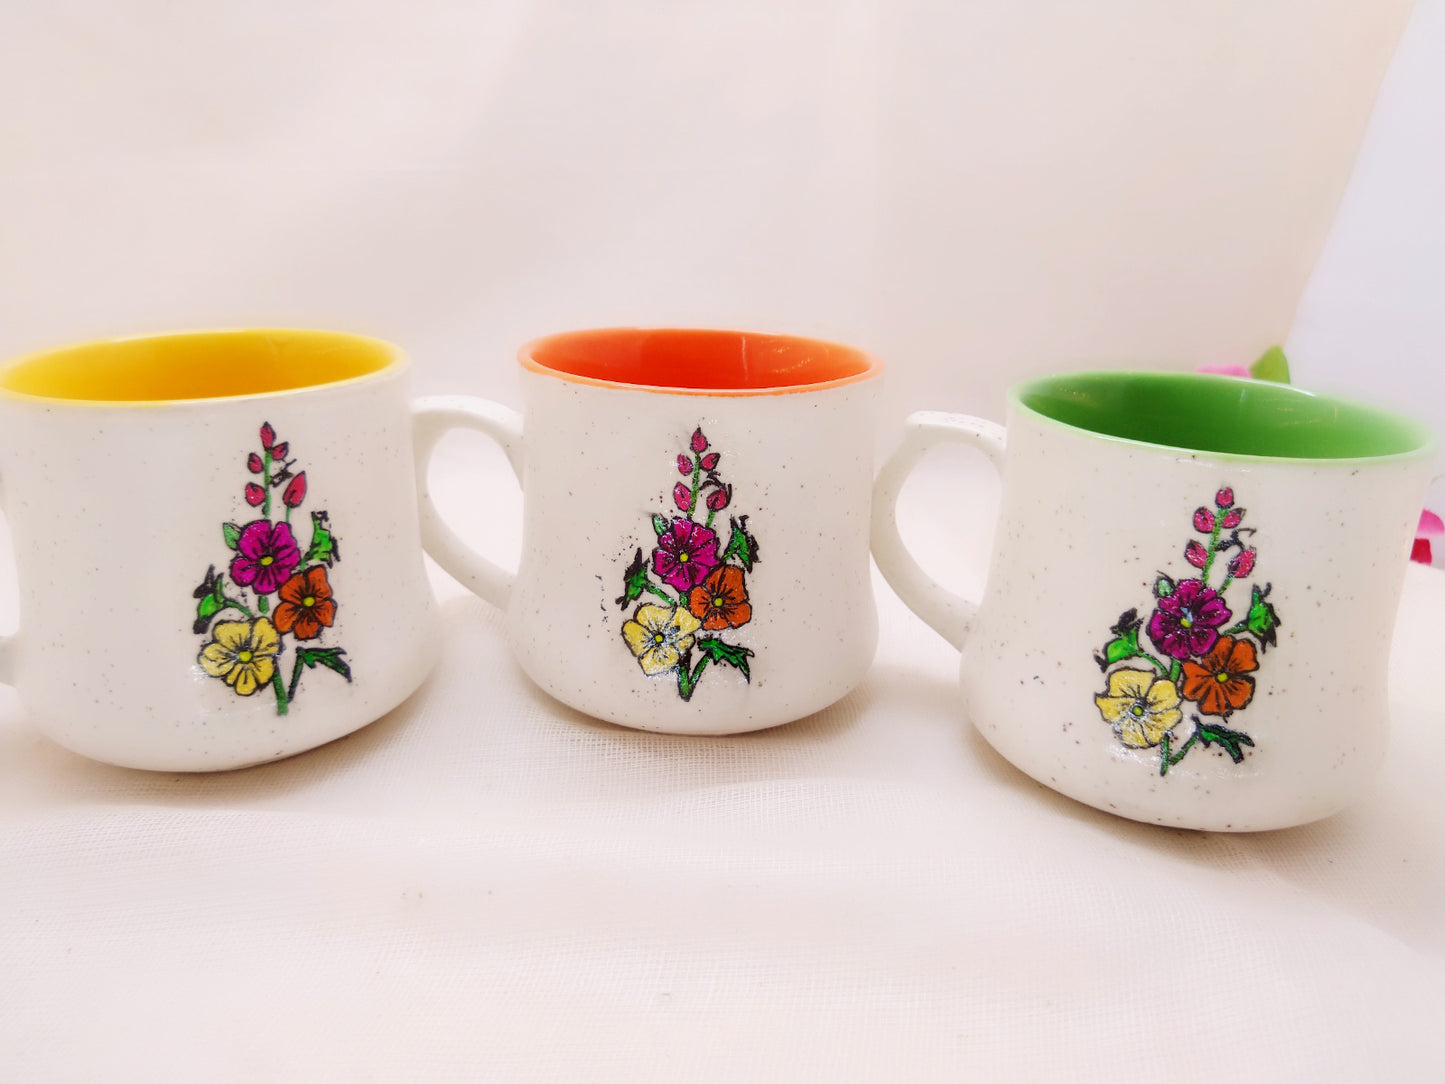 Kettle - Handpainted Flower Design with Tea Cups - Ahaeli